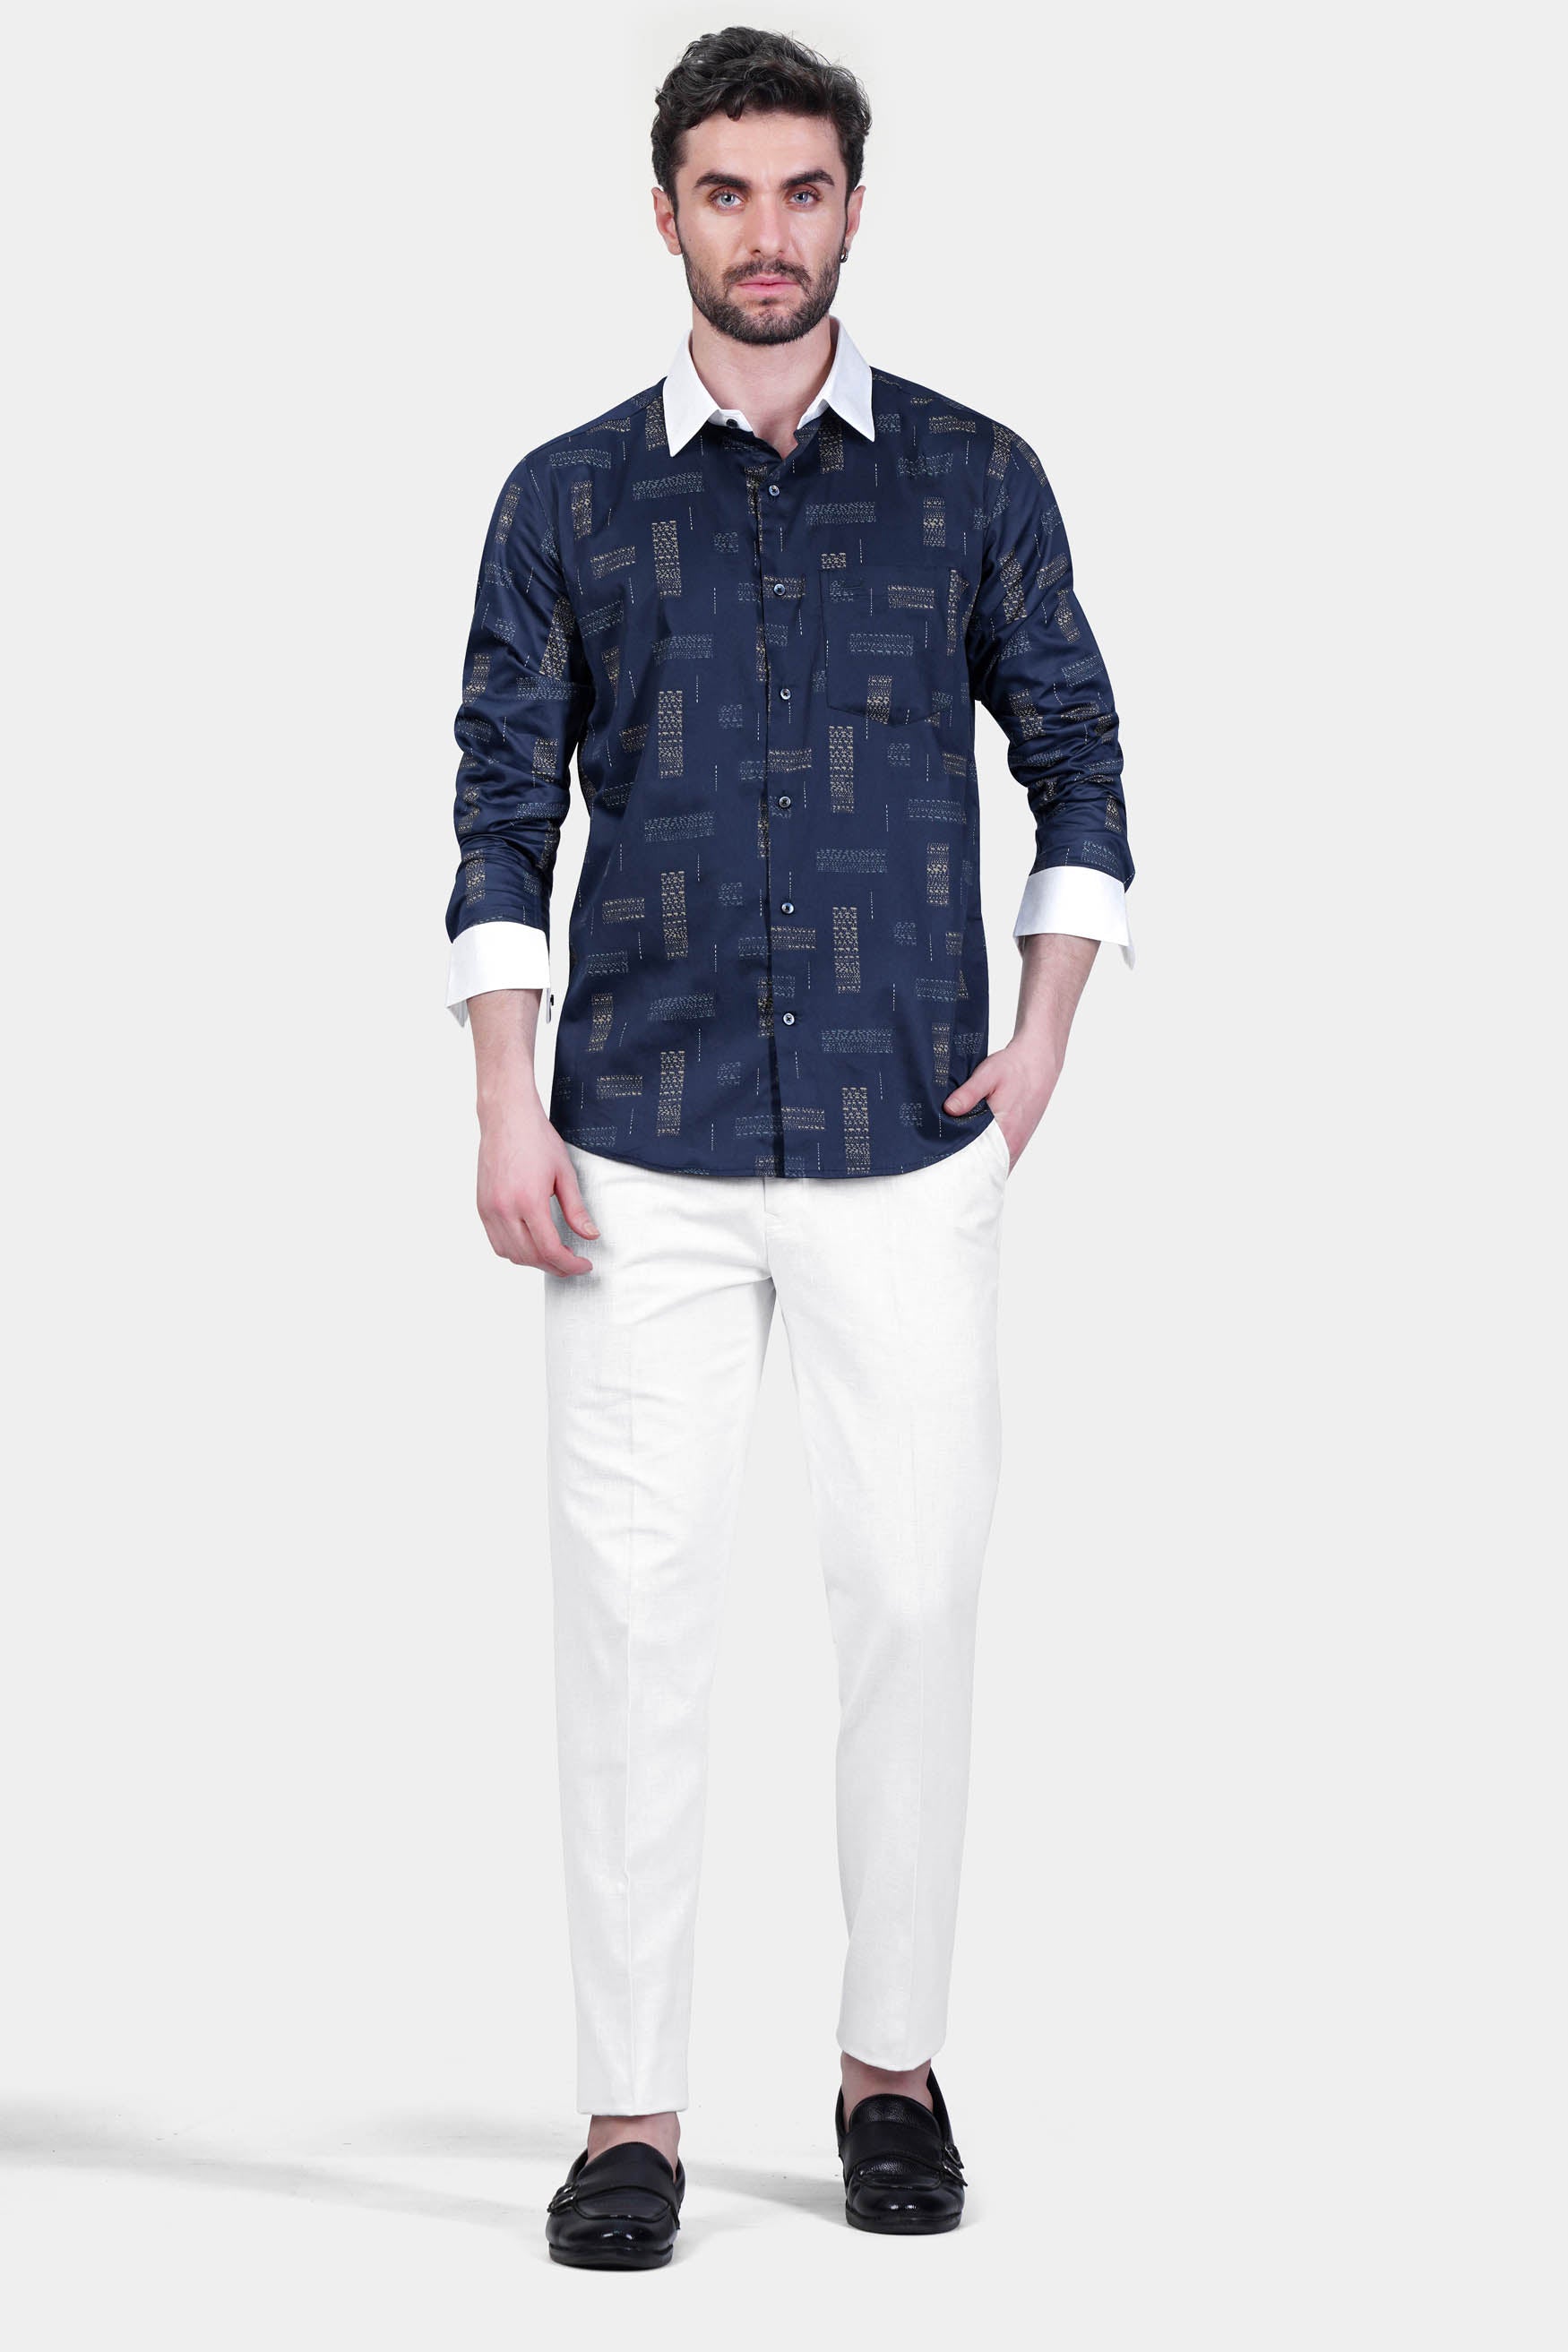 Mirage Navy Blue Printed with White Cuffs and Collar Super Soft Premium Cotton Shirt